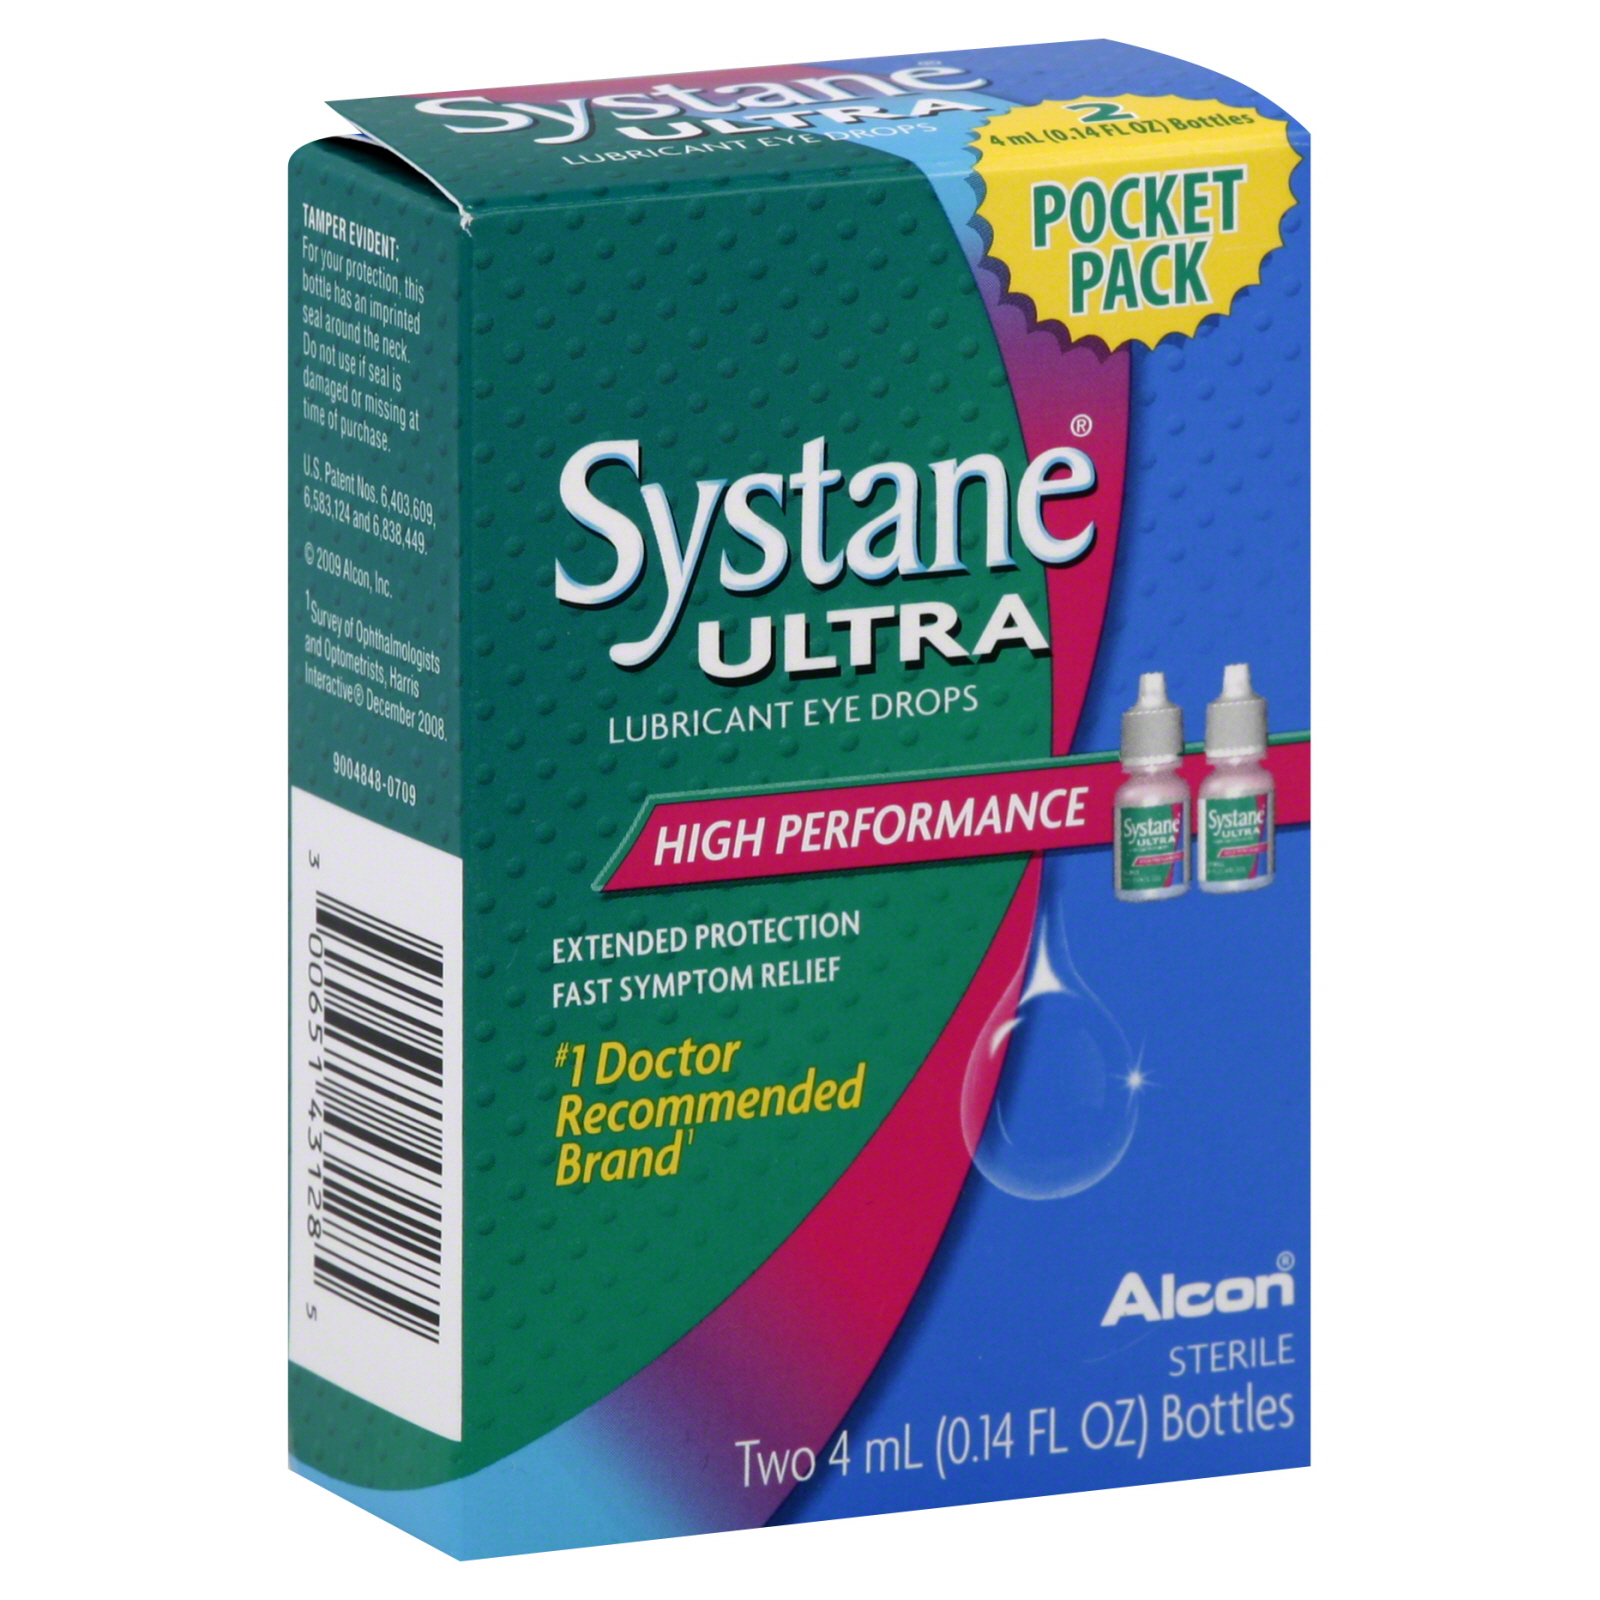 Systane Ultra Eye Drops, Lubricant, High Performance, Pocket Pack 2 - 0.14 fl oz (4 ml) bottles